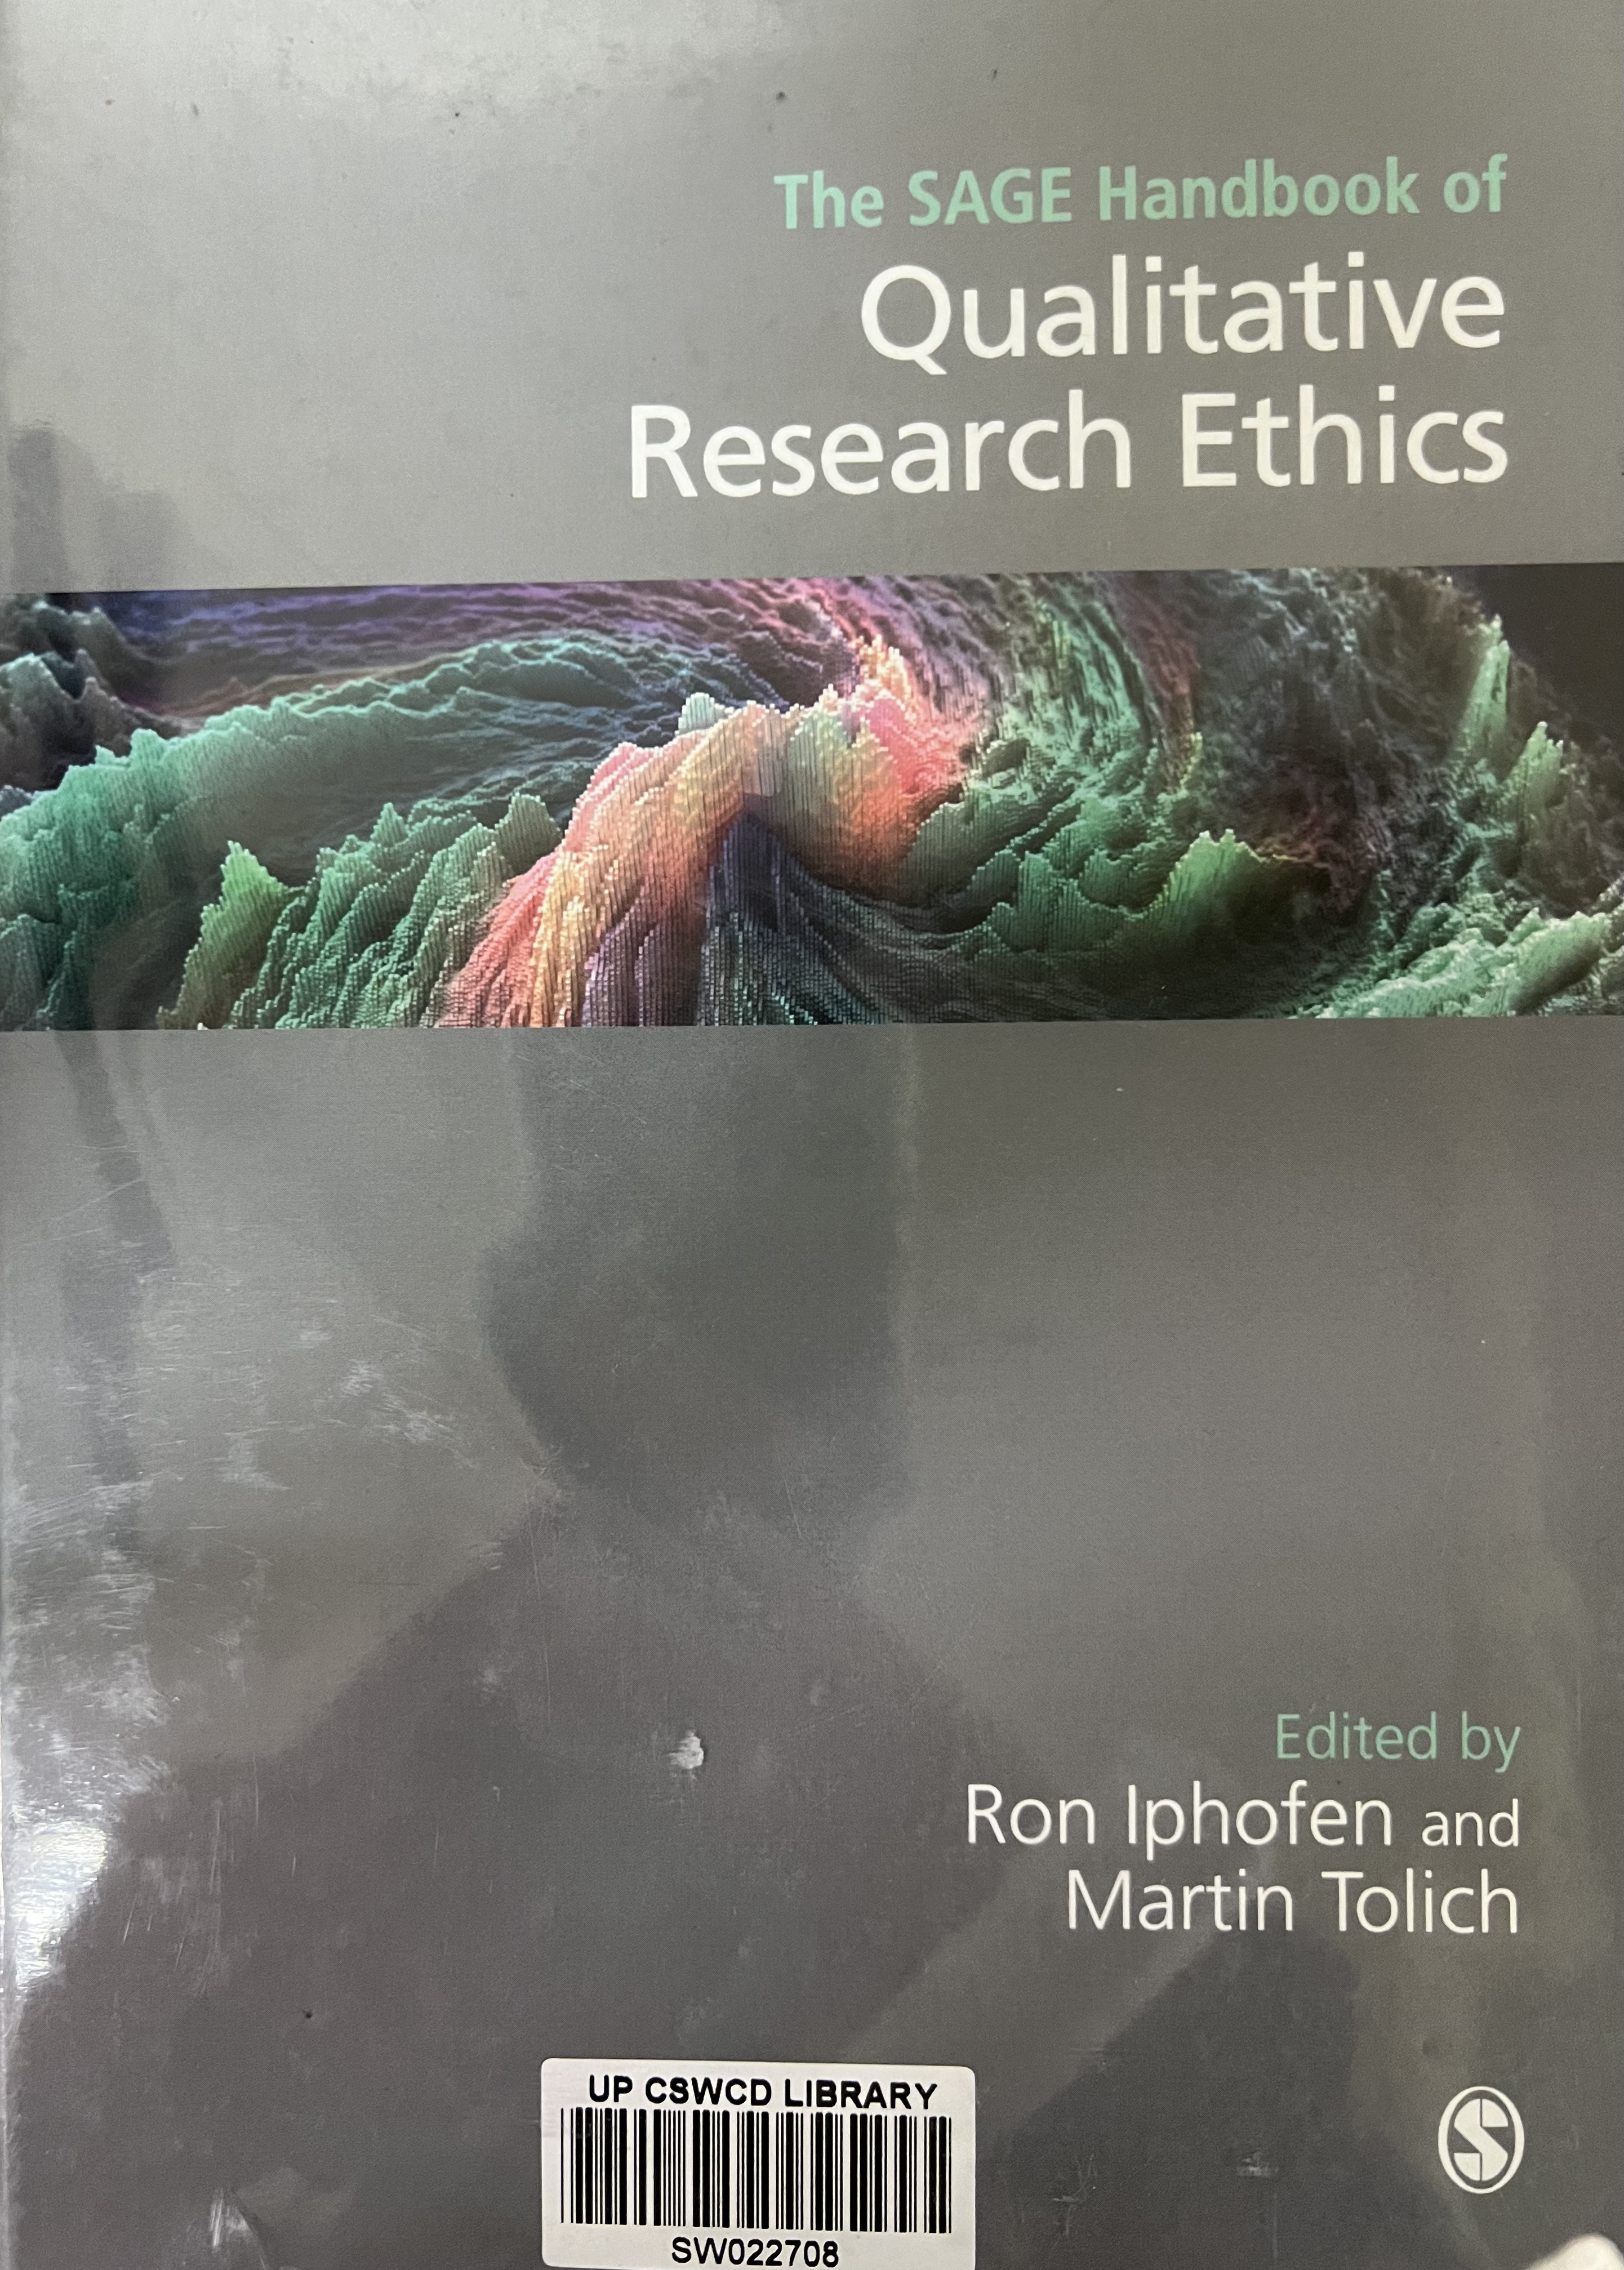 The SAGE handbook of qualitative research ethics